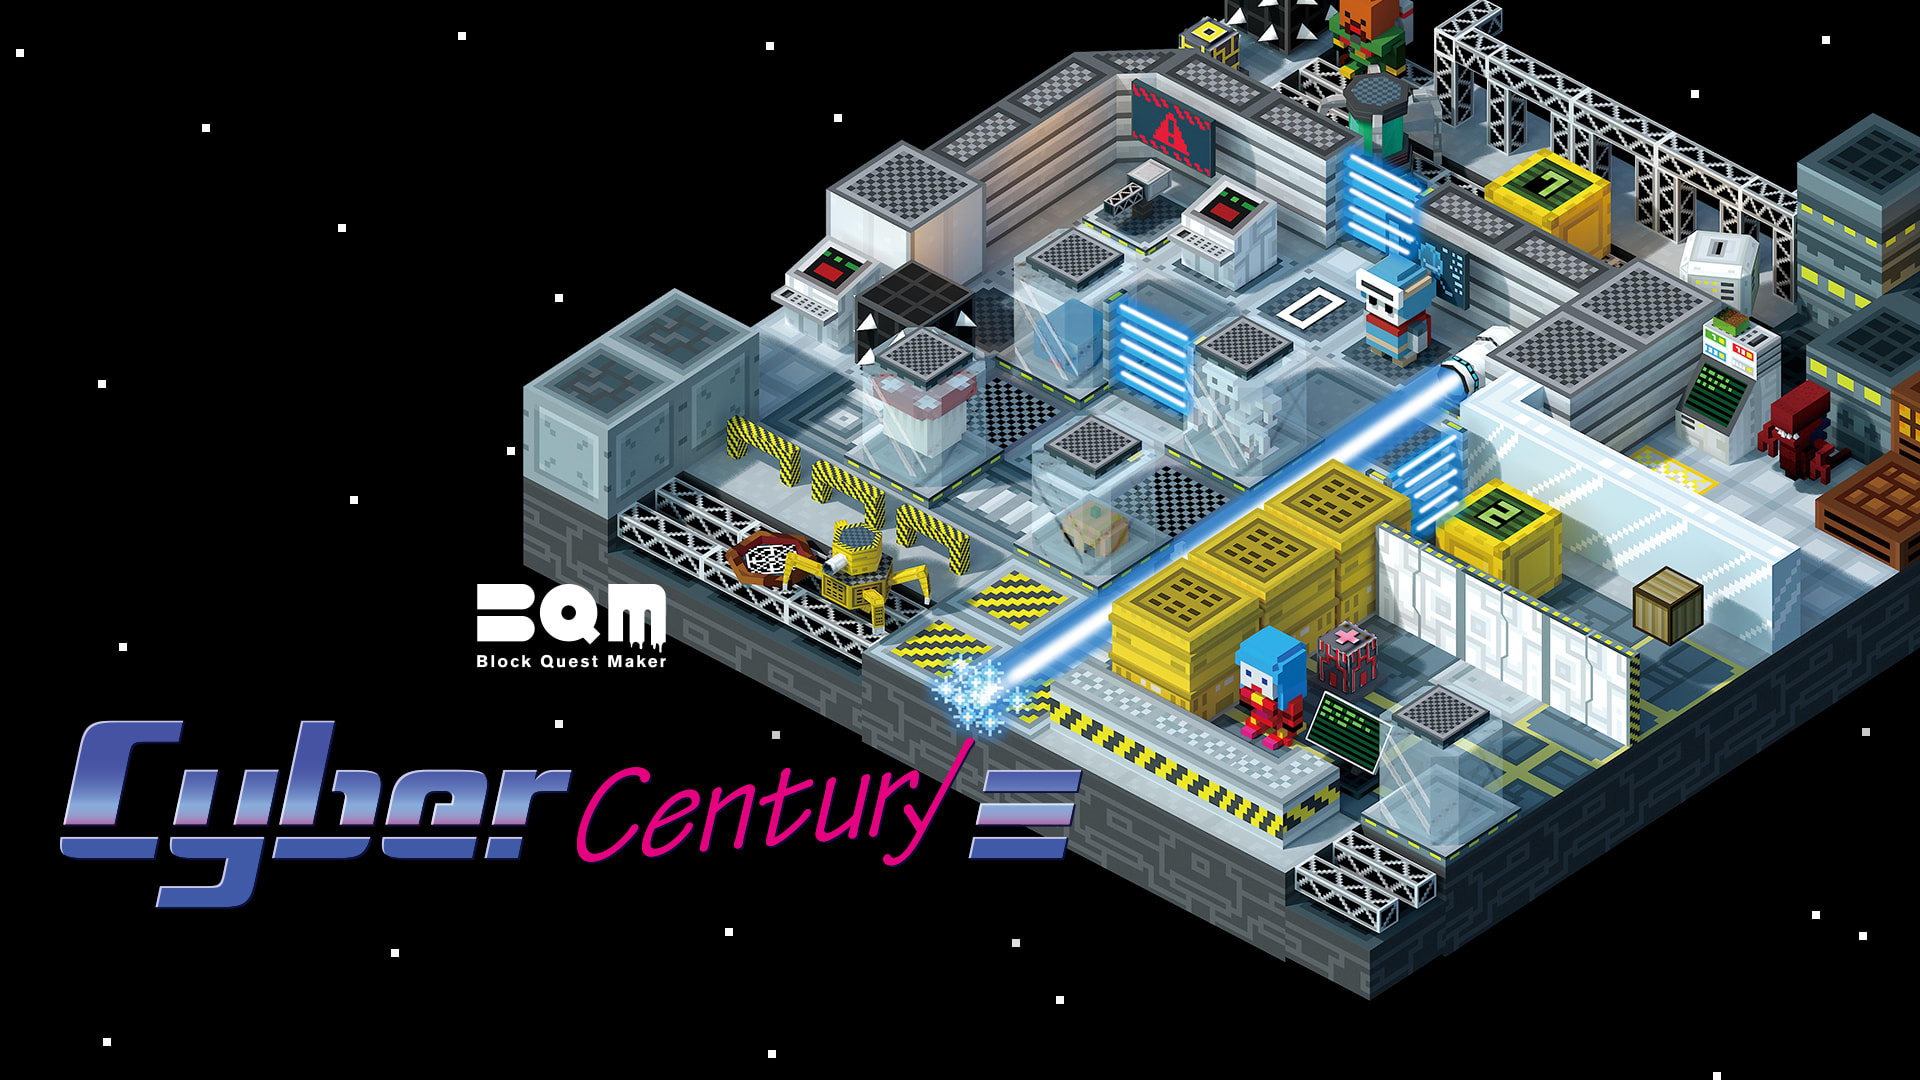 2nd DLC "Cyber Century" 1